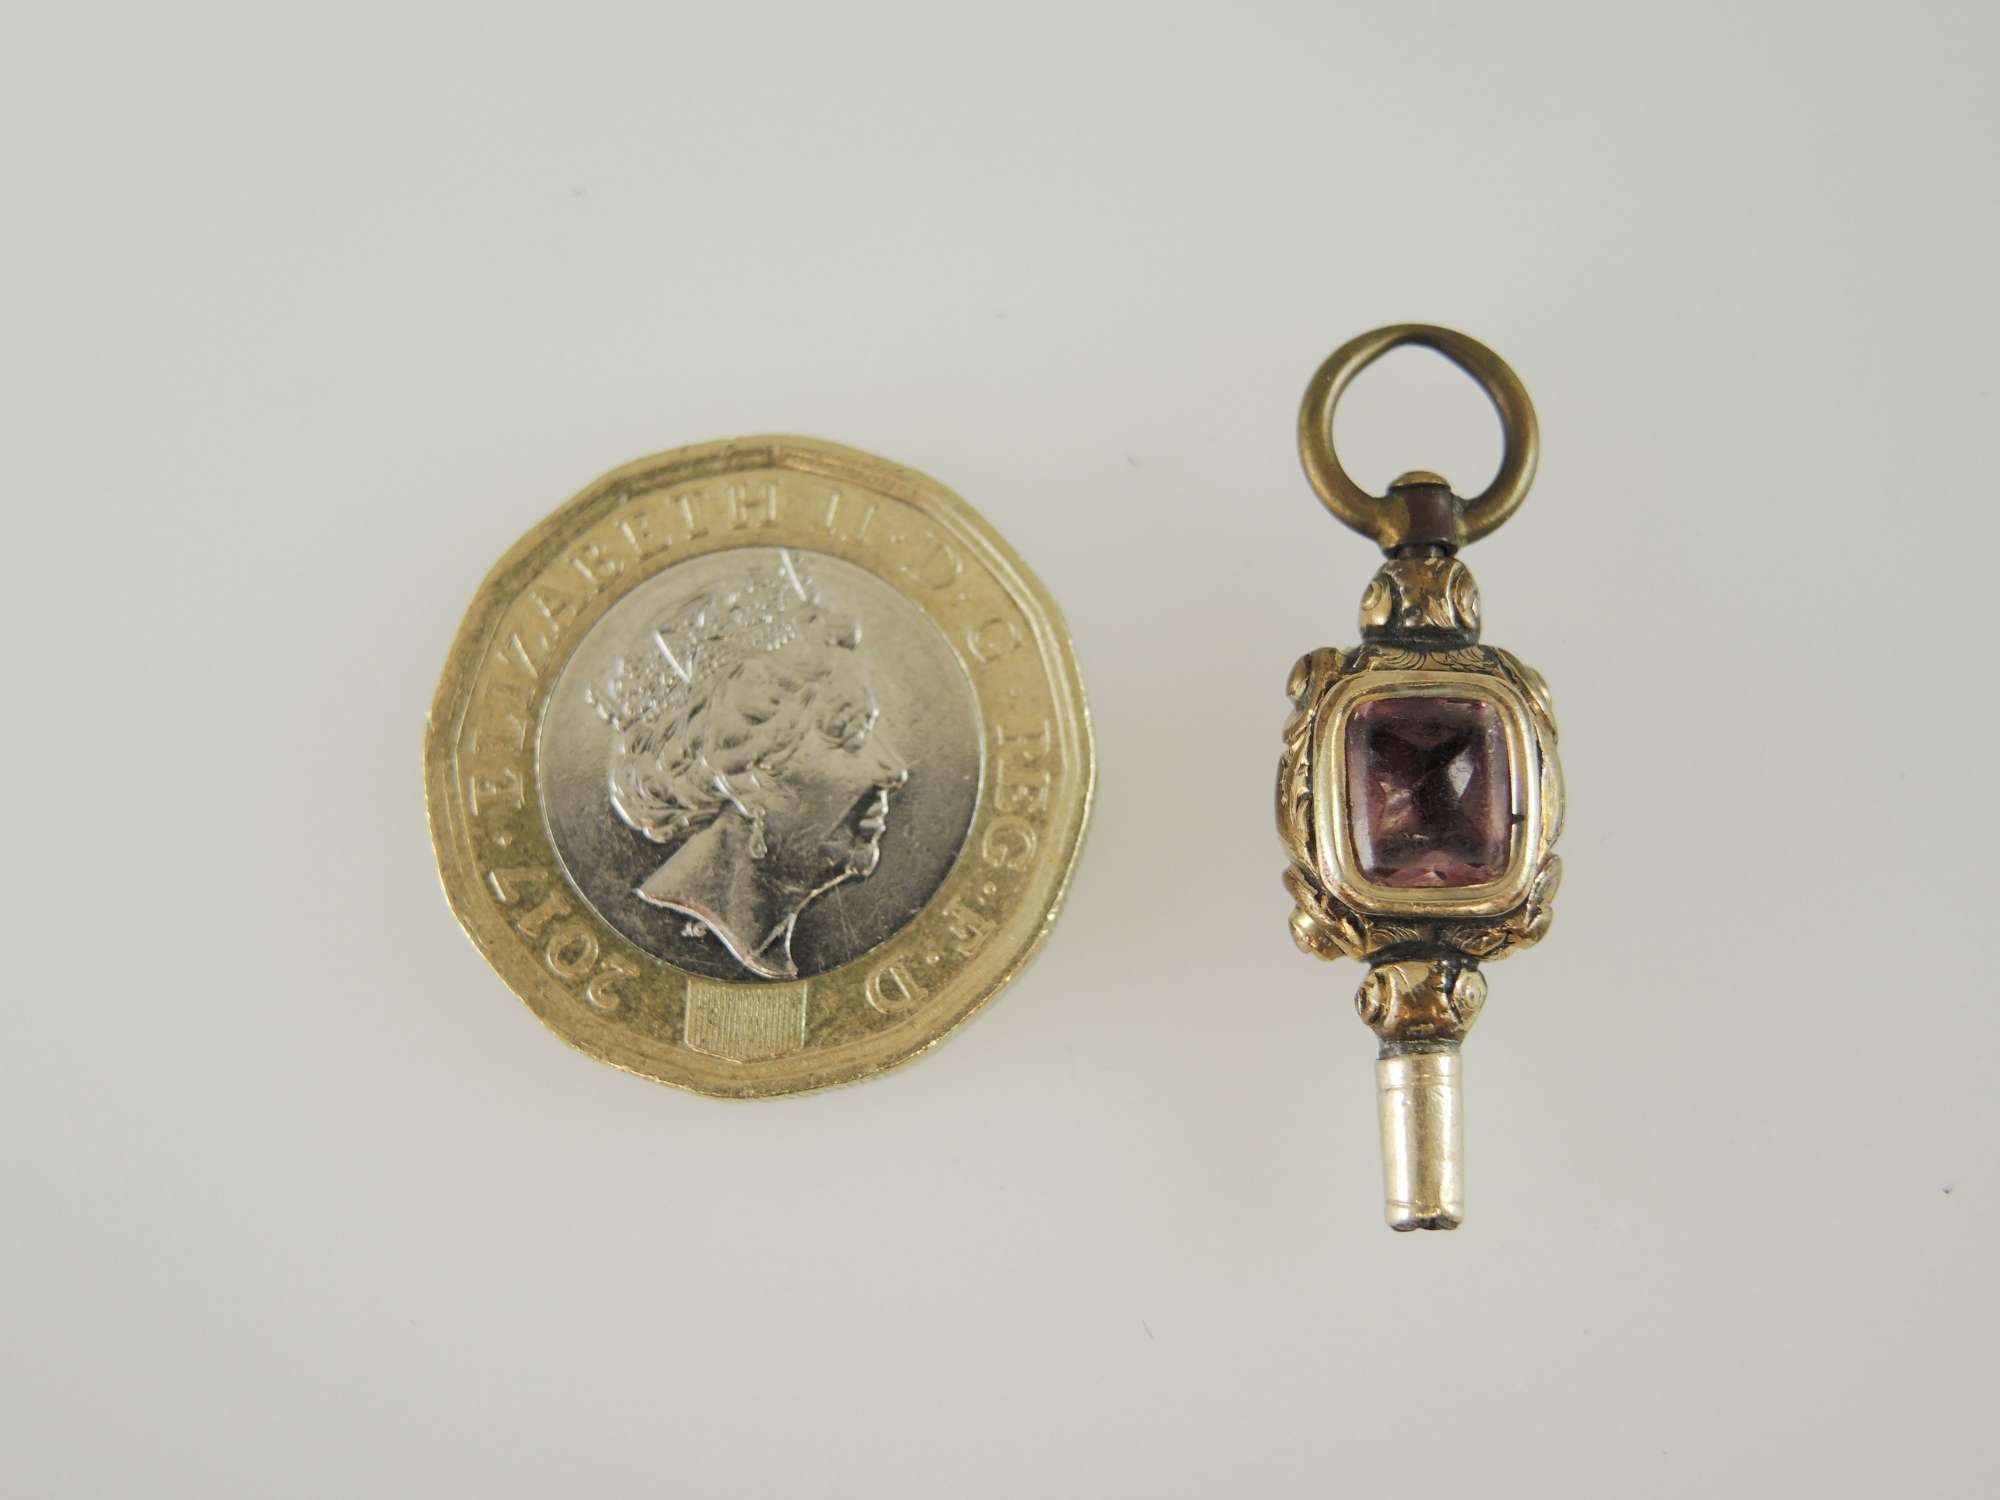 Antique pocket watch key c1880